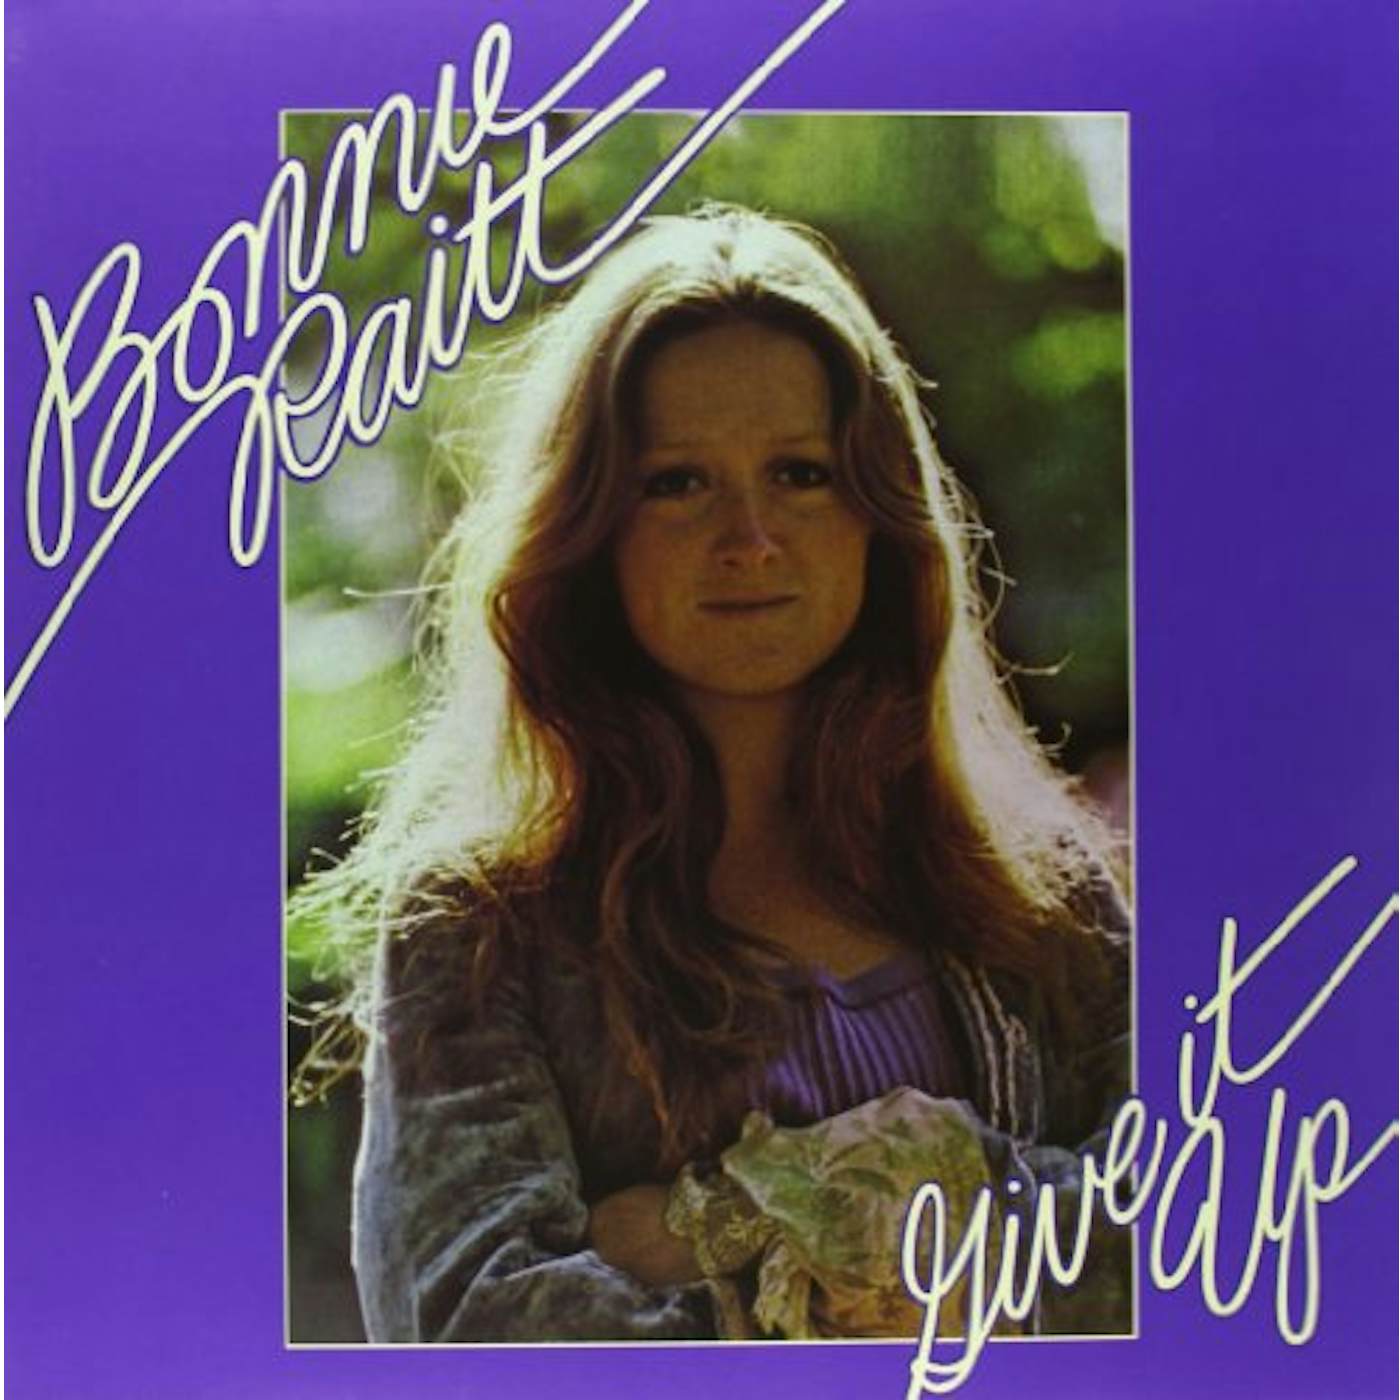 Bonnie Raitt GIVE IT UP Vinyl Record - 180 Gram Pressing